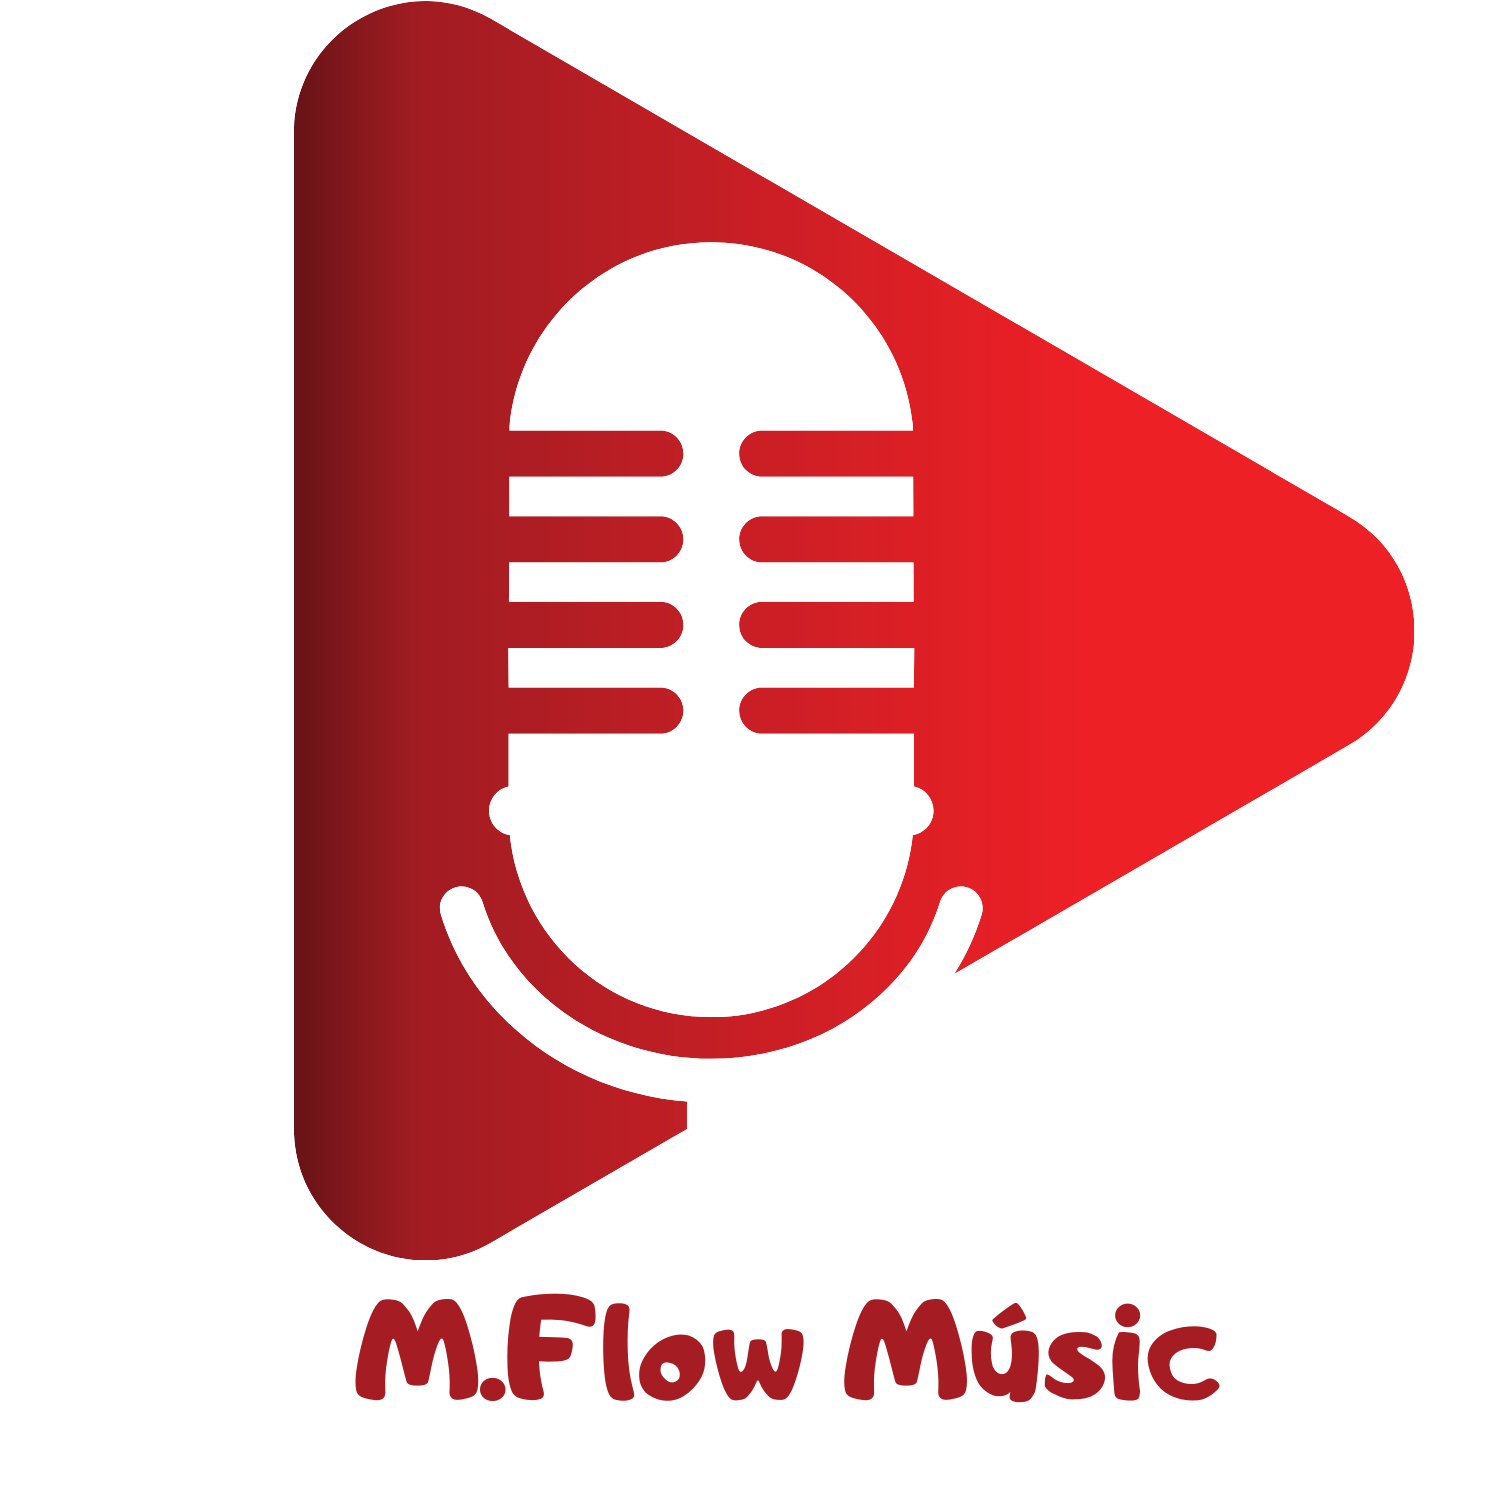 M.Flow Músic